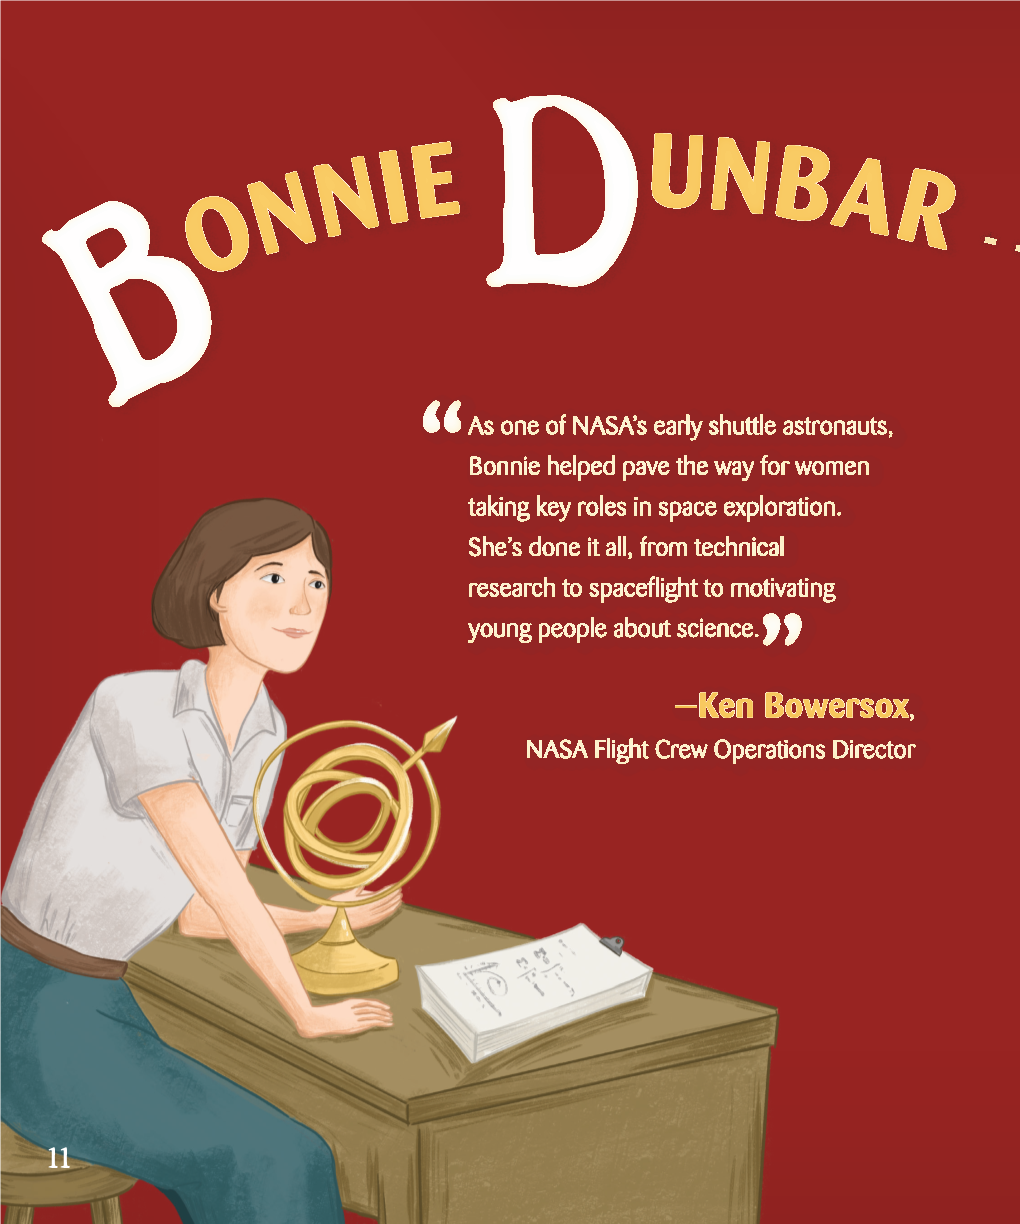 Bonnie Dunbar Is One of the Earliest American Female Astronauts